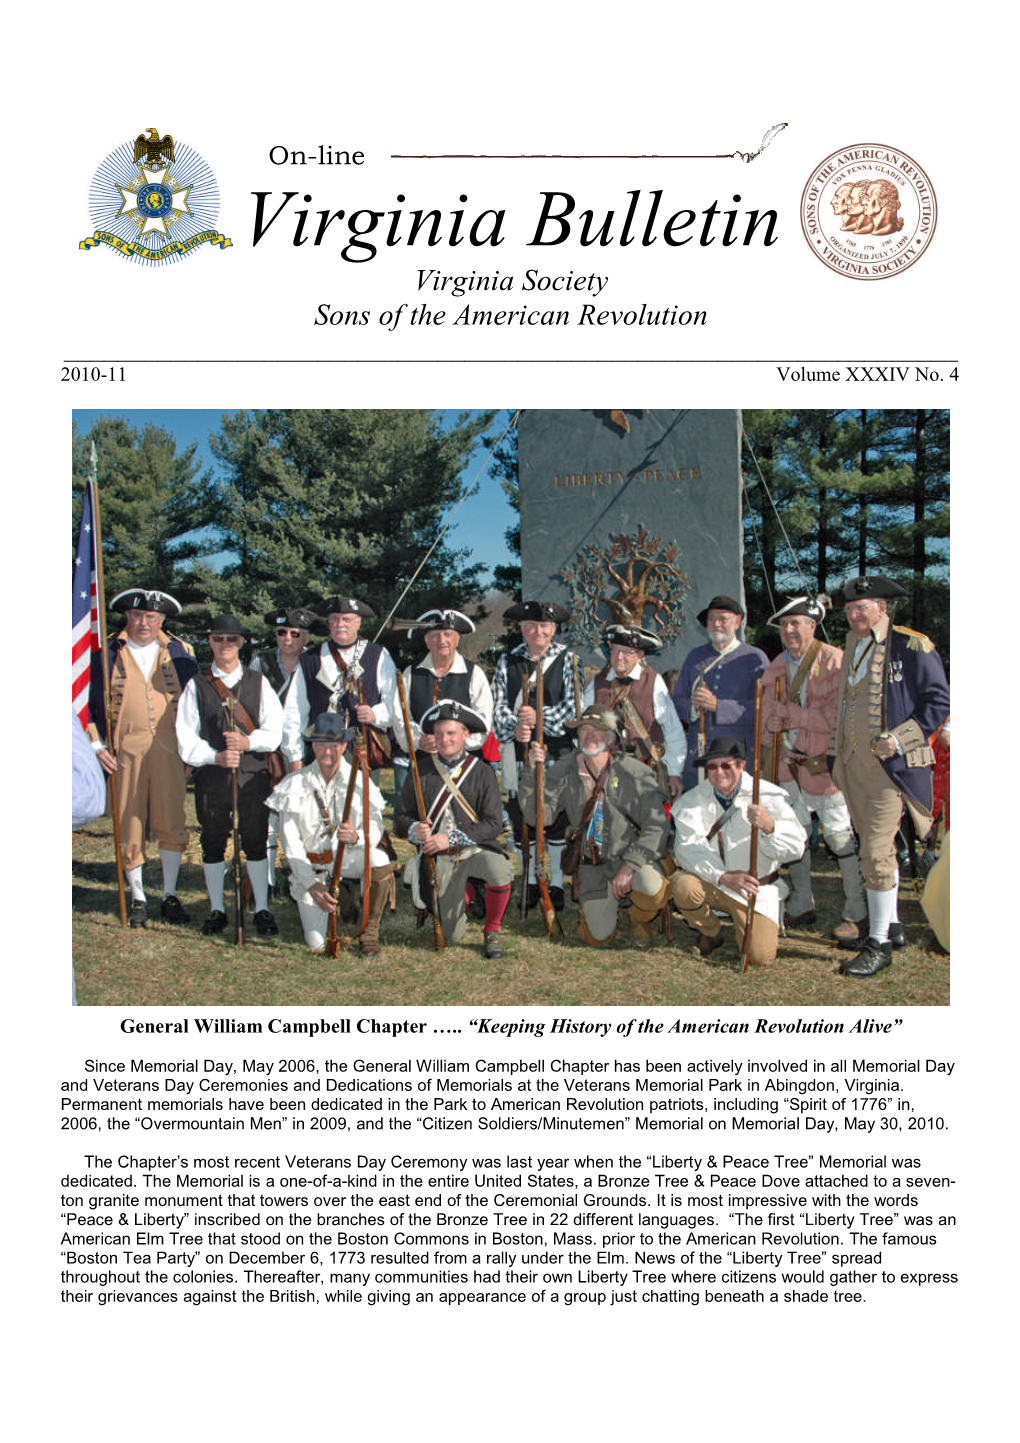 Virginia Bulletin Virginia Society Sons of the American Revolution ______2010-11 Volume XXXIV No